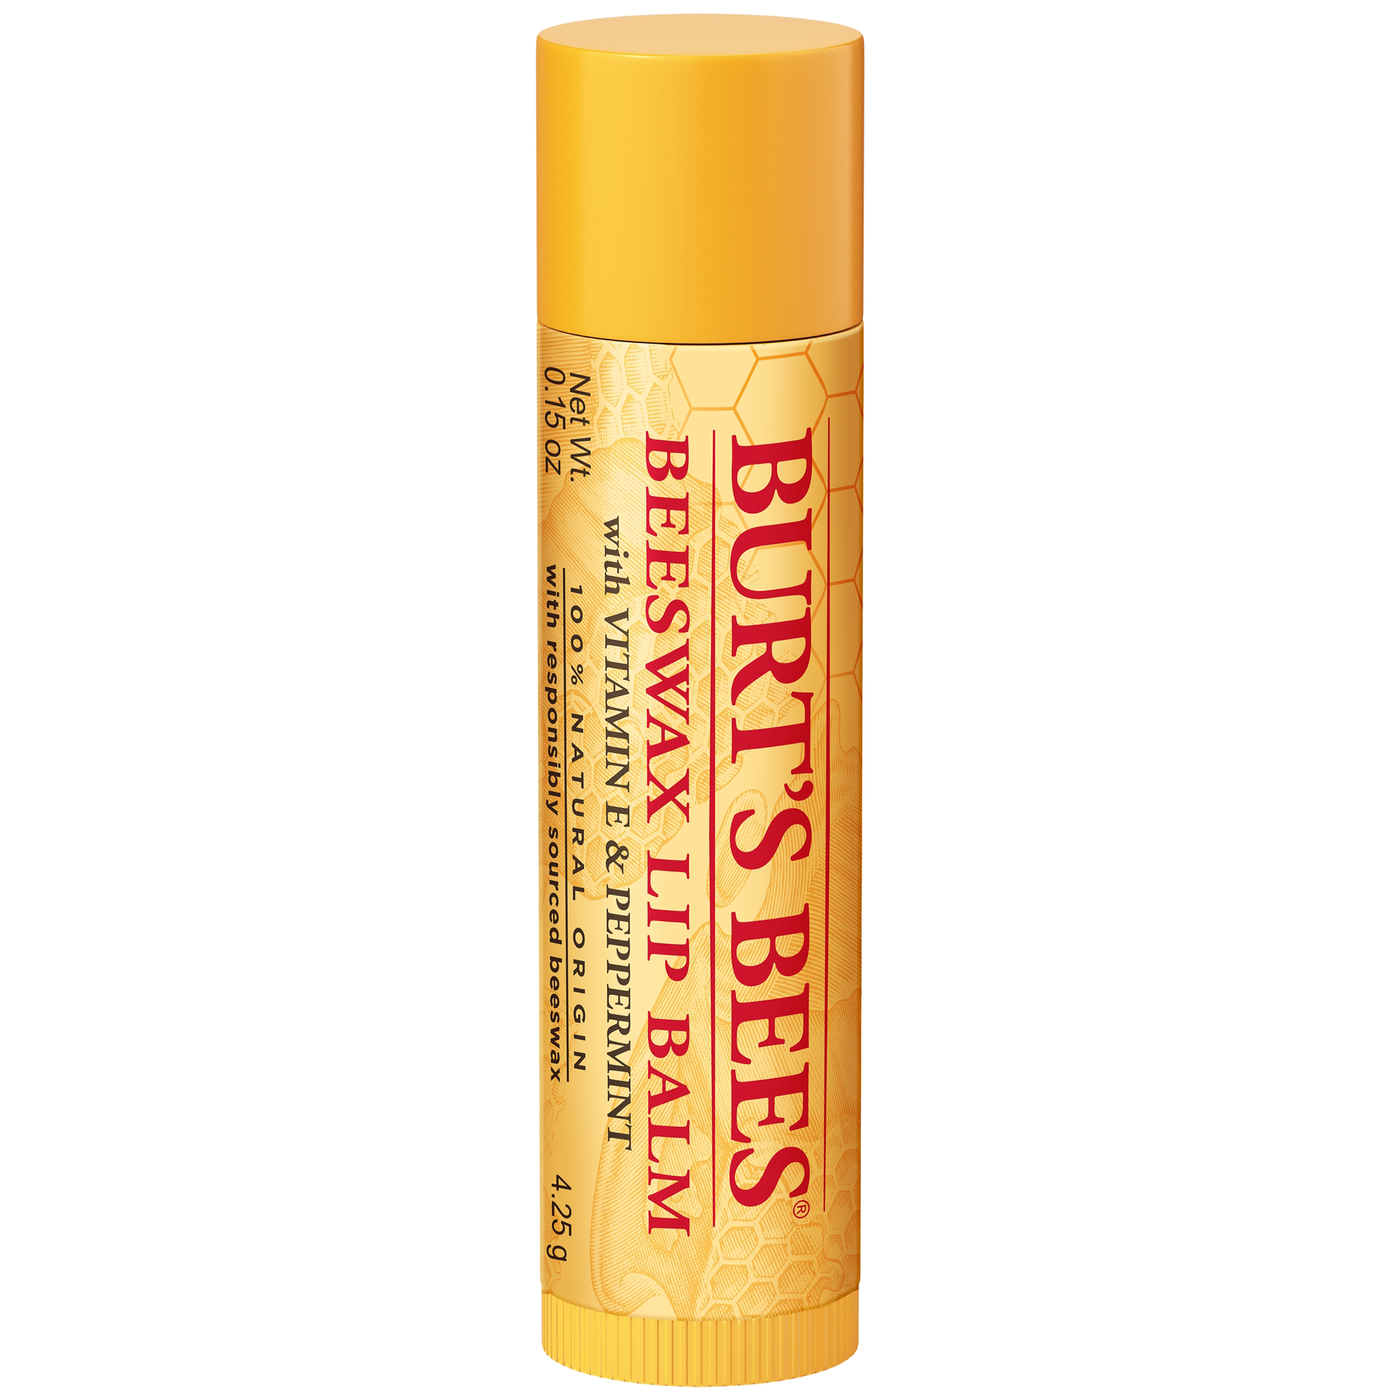 Burt's Bees Lip Balm Beeswax 0.15oz Curated Wellness